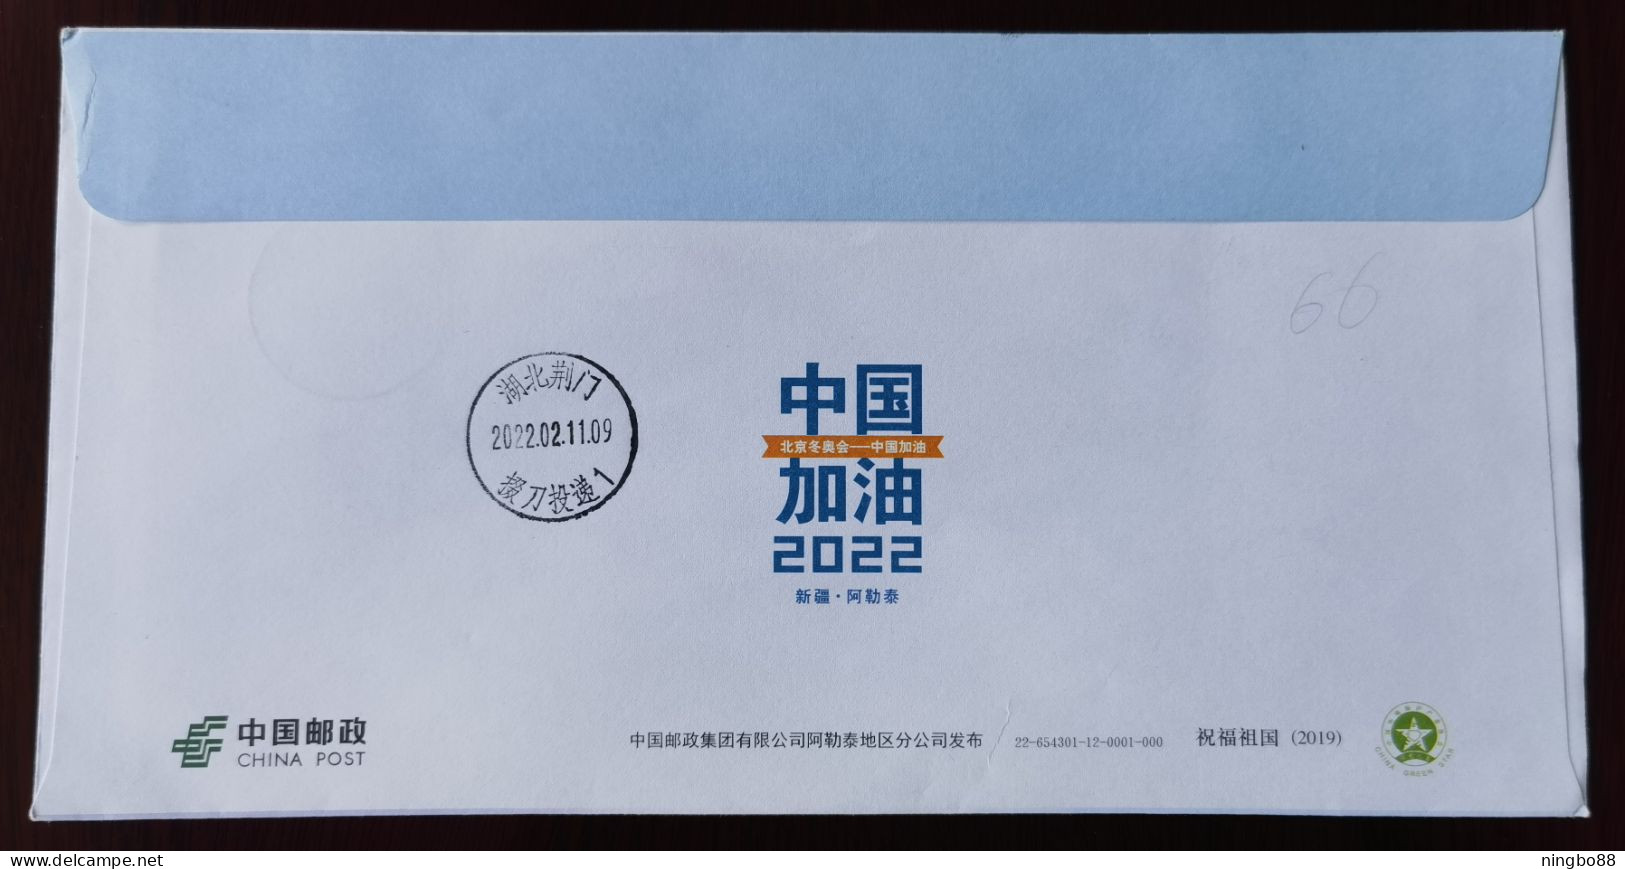 Skiing Player On Giro Snowboard,CN 22 Beijing 2022 Winter Olympic Games "China Cheer On!" Postal Stationery Envelope - Hiver 2022 : Pékin